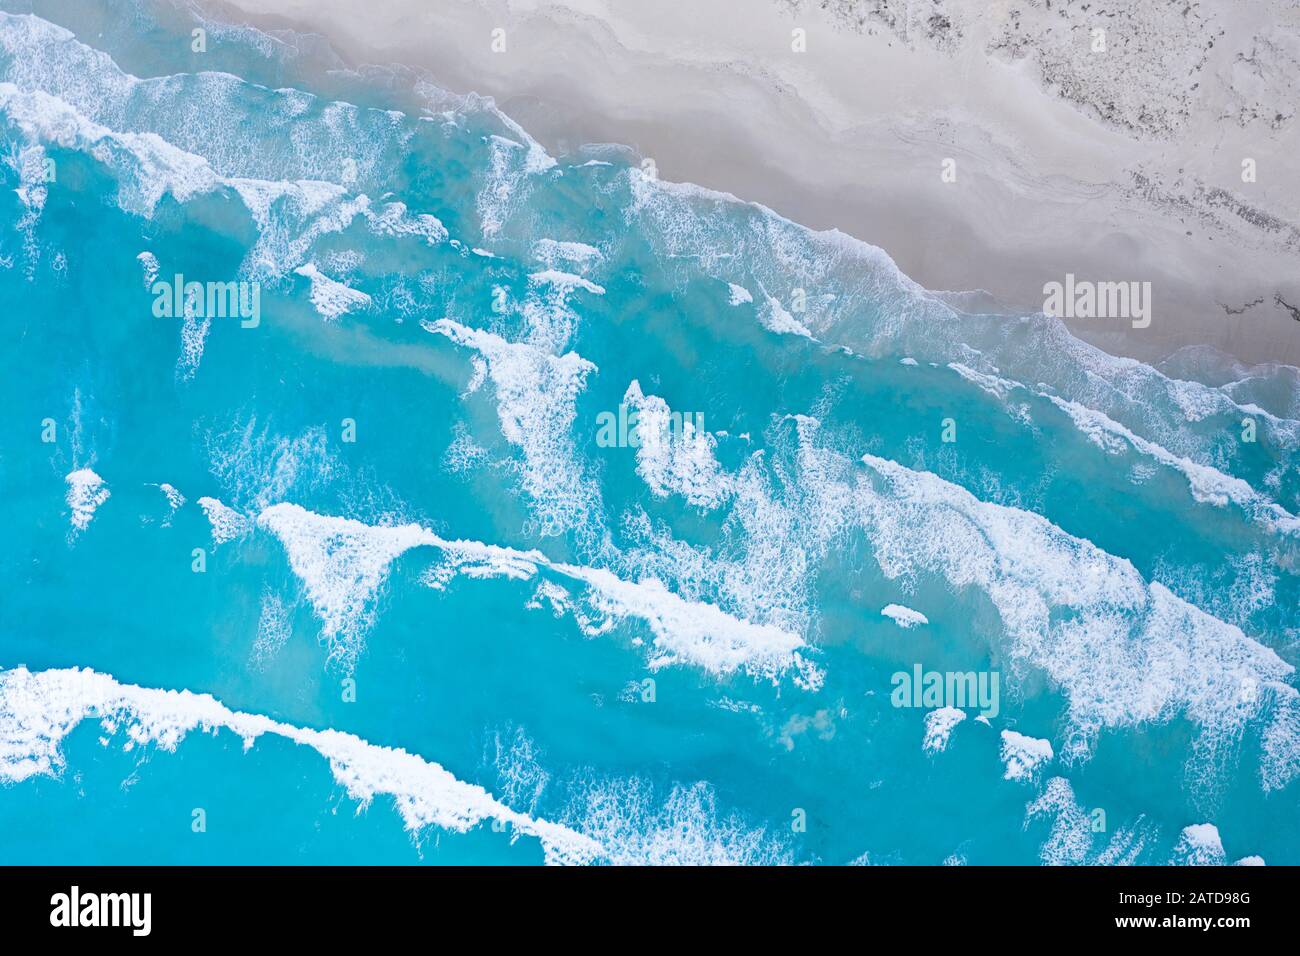 Vista aérea de las olas del océano en la playa, Australia Occidental, Australia Foto de stock